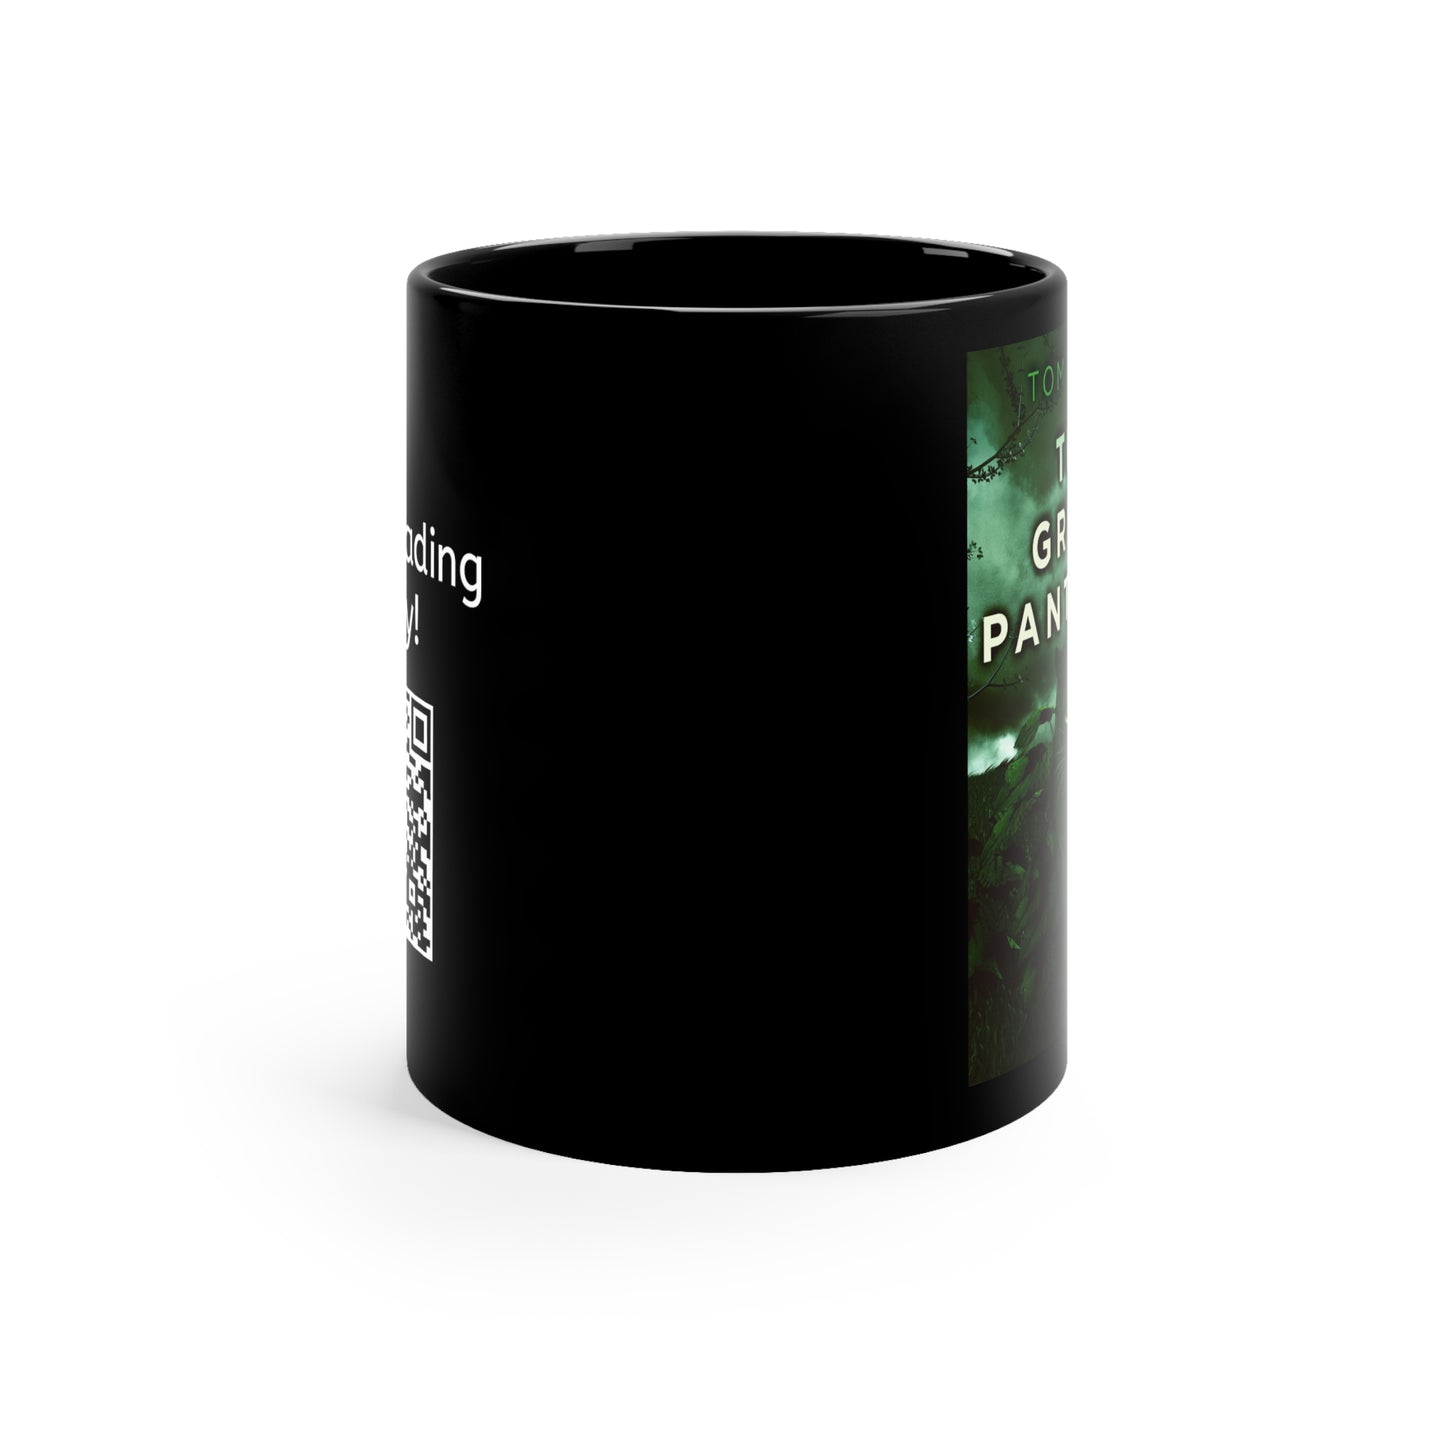 The Green Panthers - Black Coffee Mug